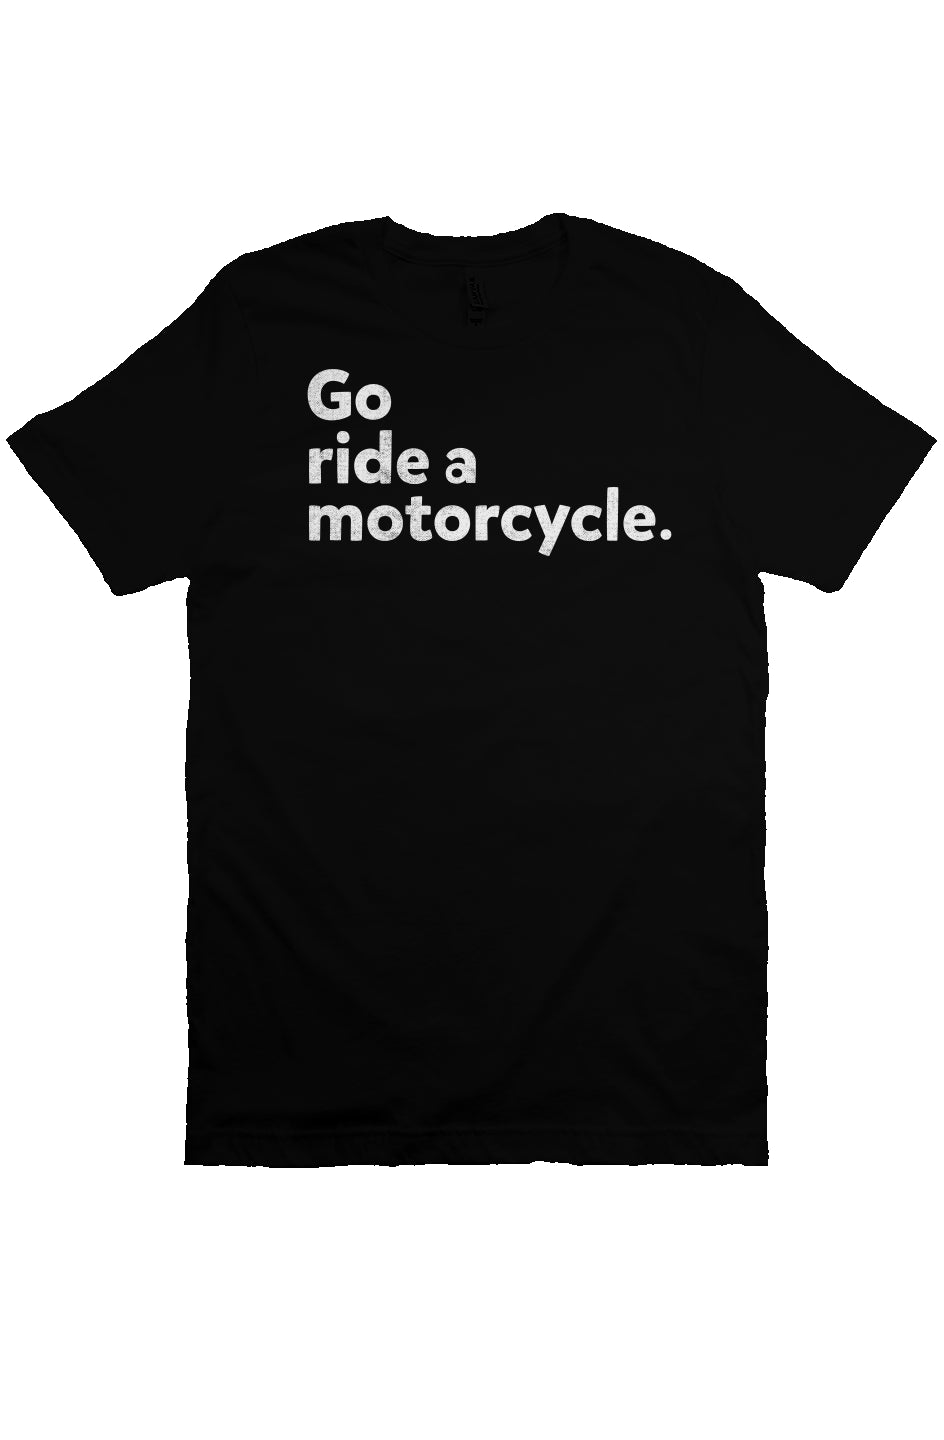 GRAM "Go ride a motorcycle" Unisex Shirt